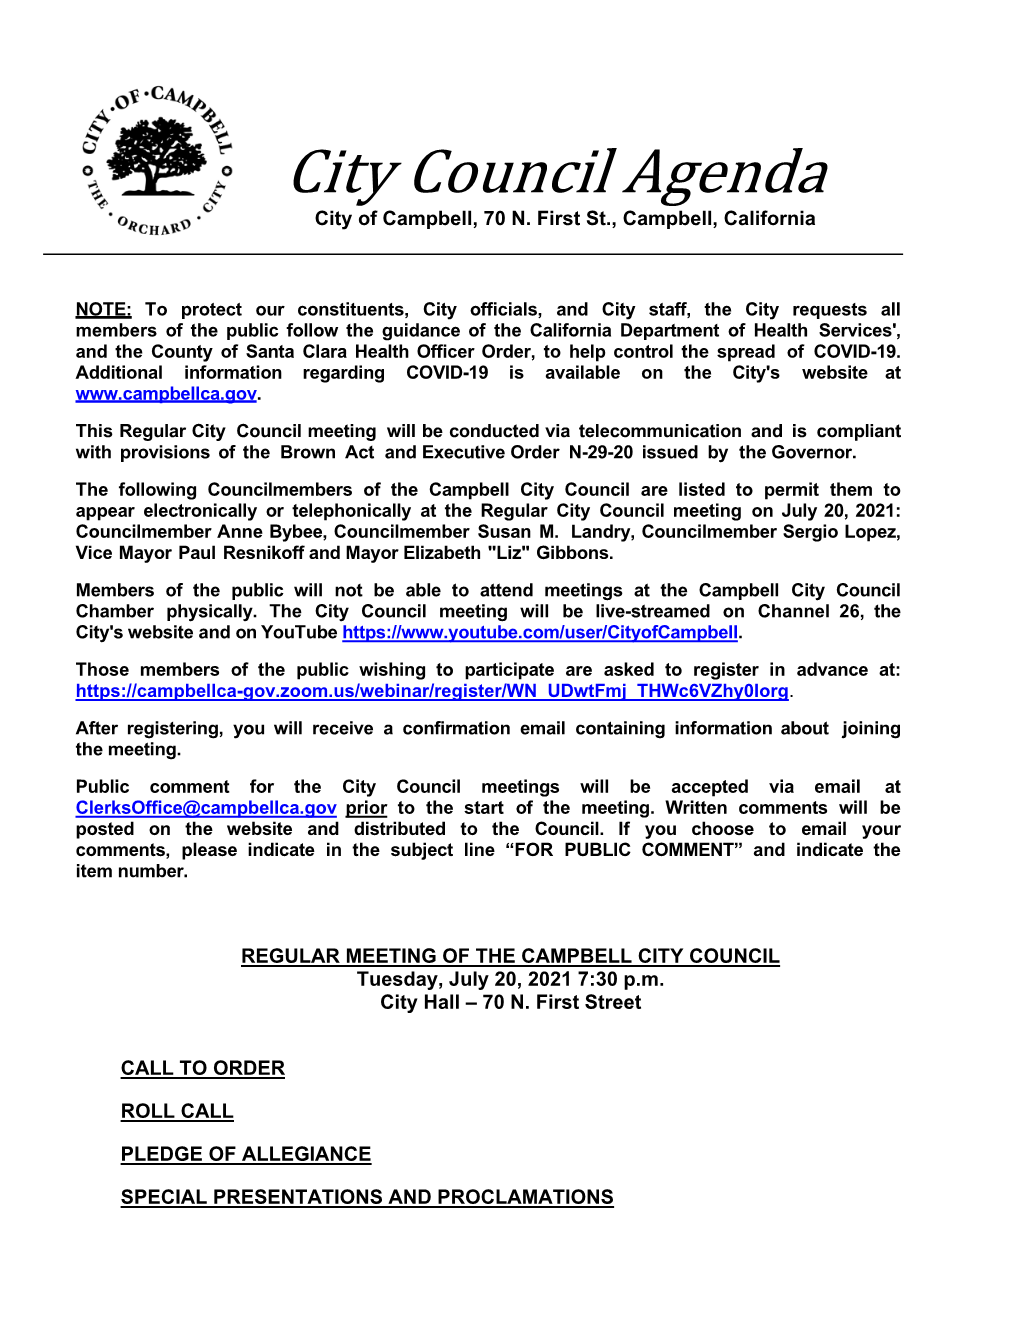 City Council Meeting Agenda 7/20/2021